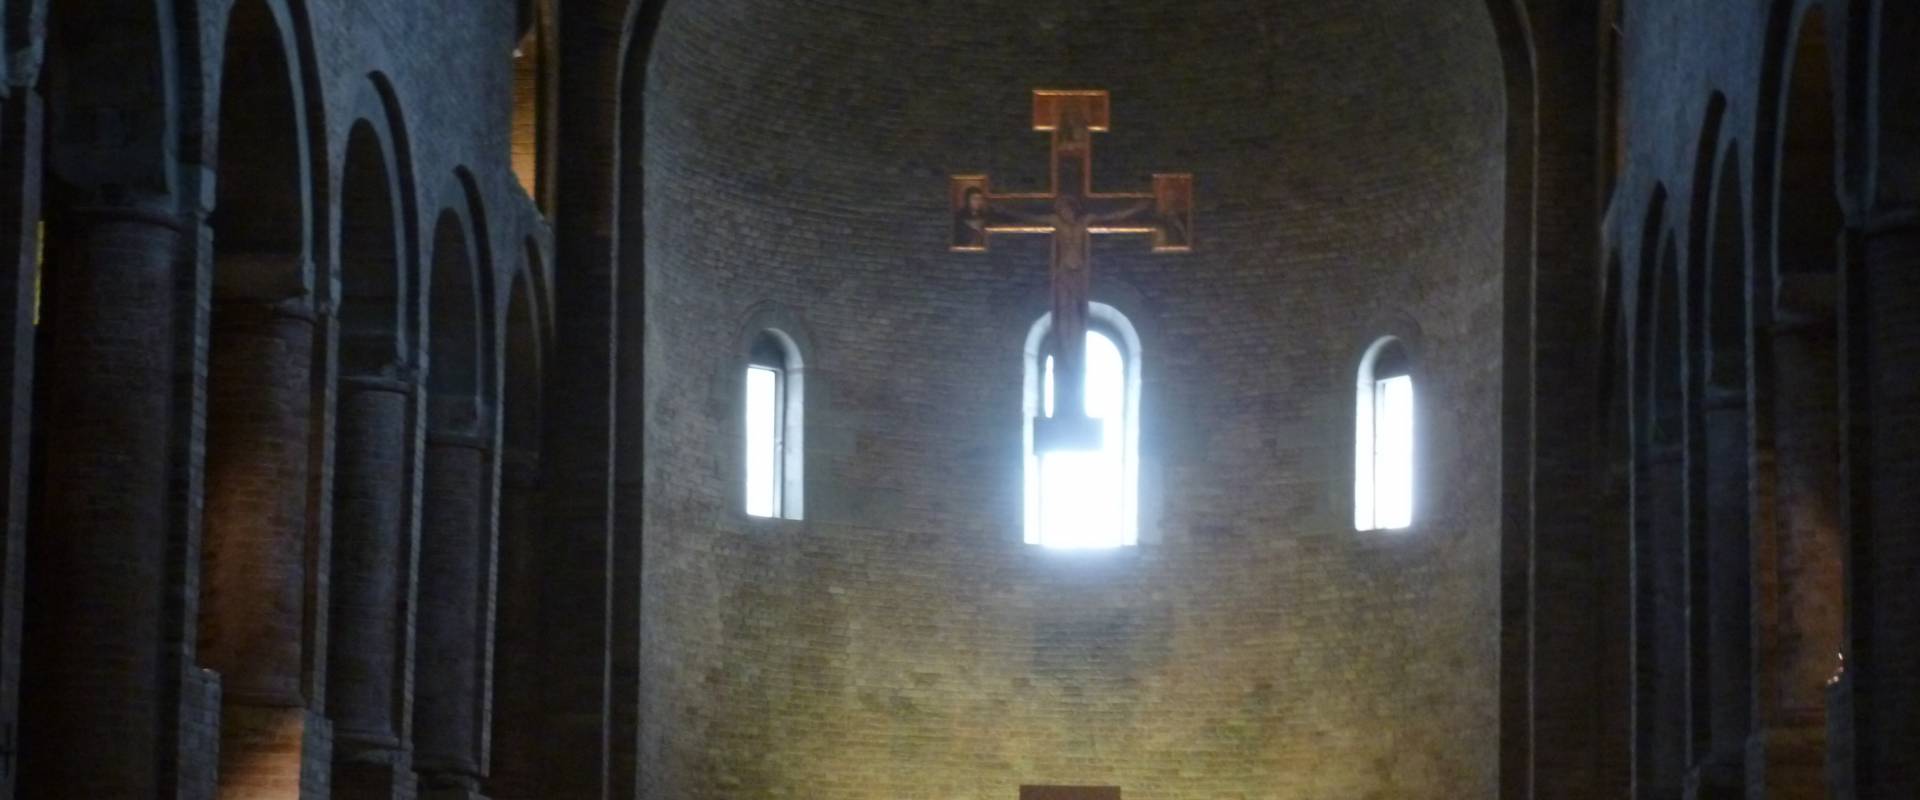 Basilica concattedrale di Sarsina - 13 foto di Diego Baglieri